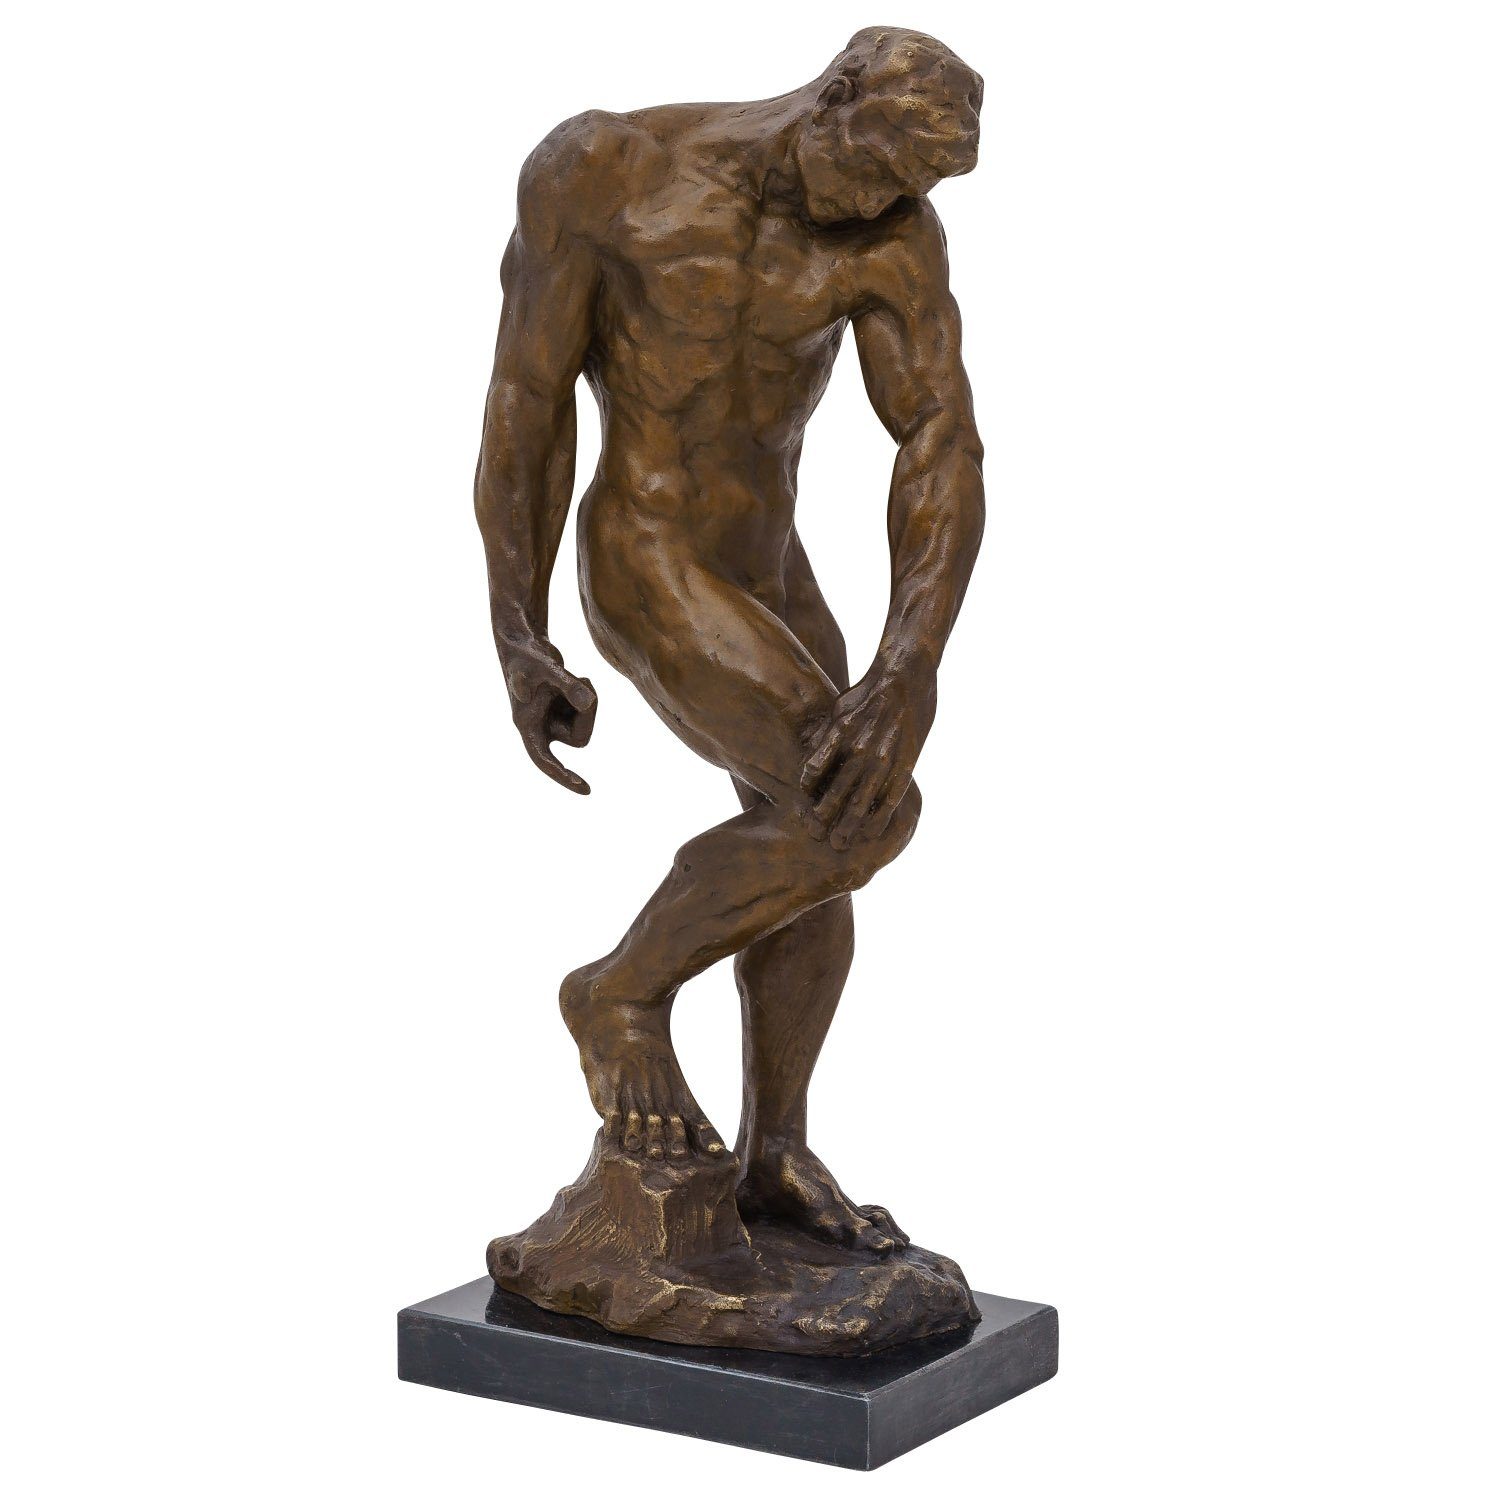 Aubaho Skulptur Bronzeskulptur Adam nach Rodin, Kopie, im Antik-Stil Bronze Figur Stat